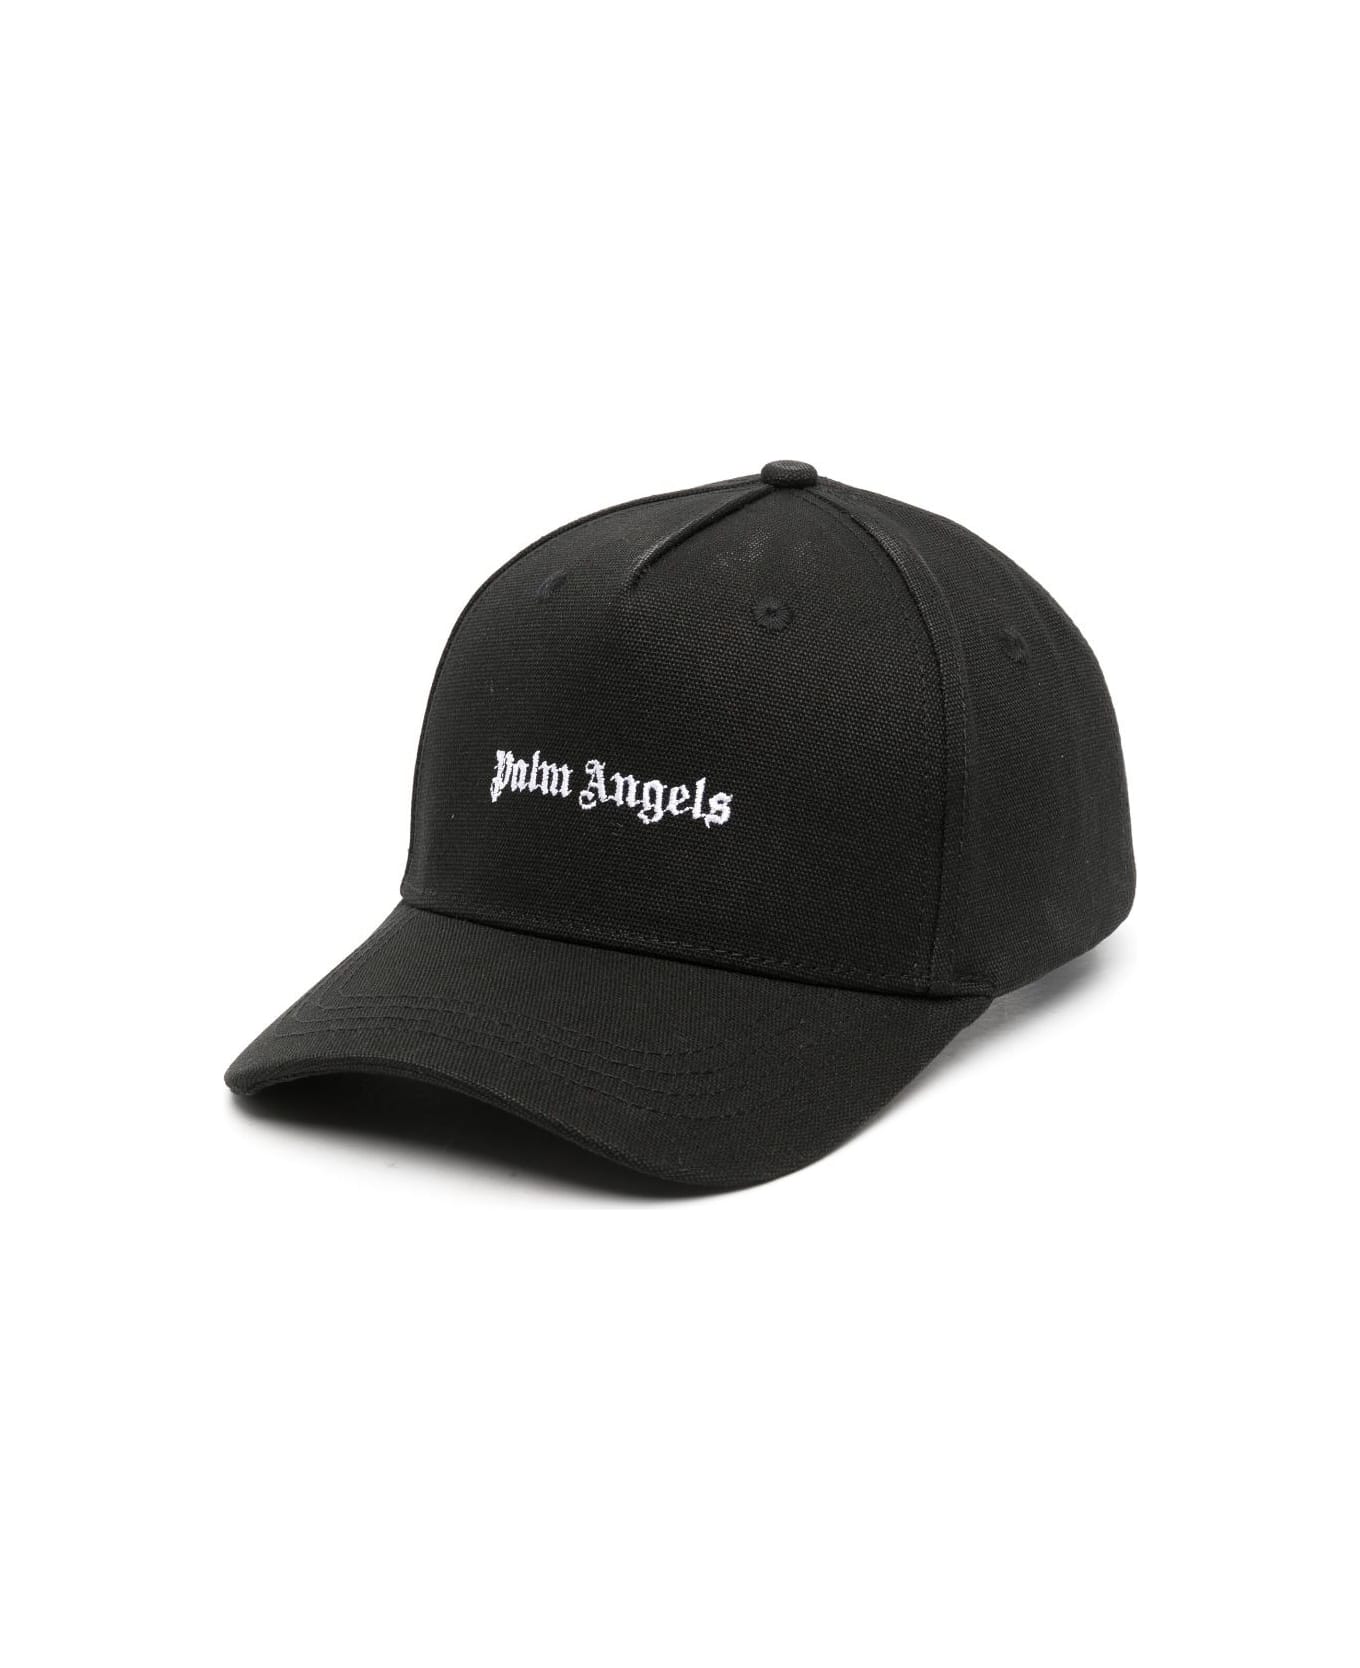 Palm Angels Black Baseball Hat With Logo - Black